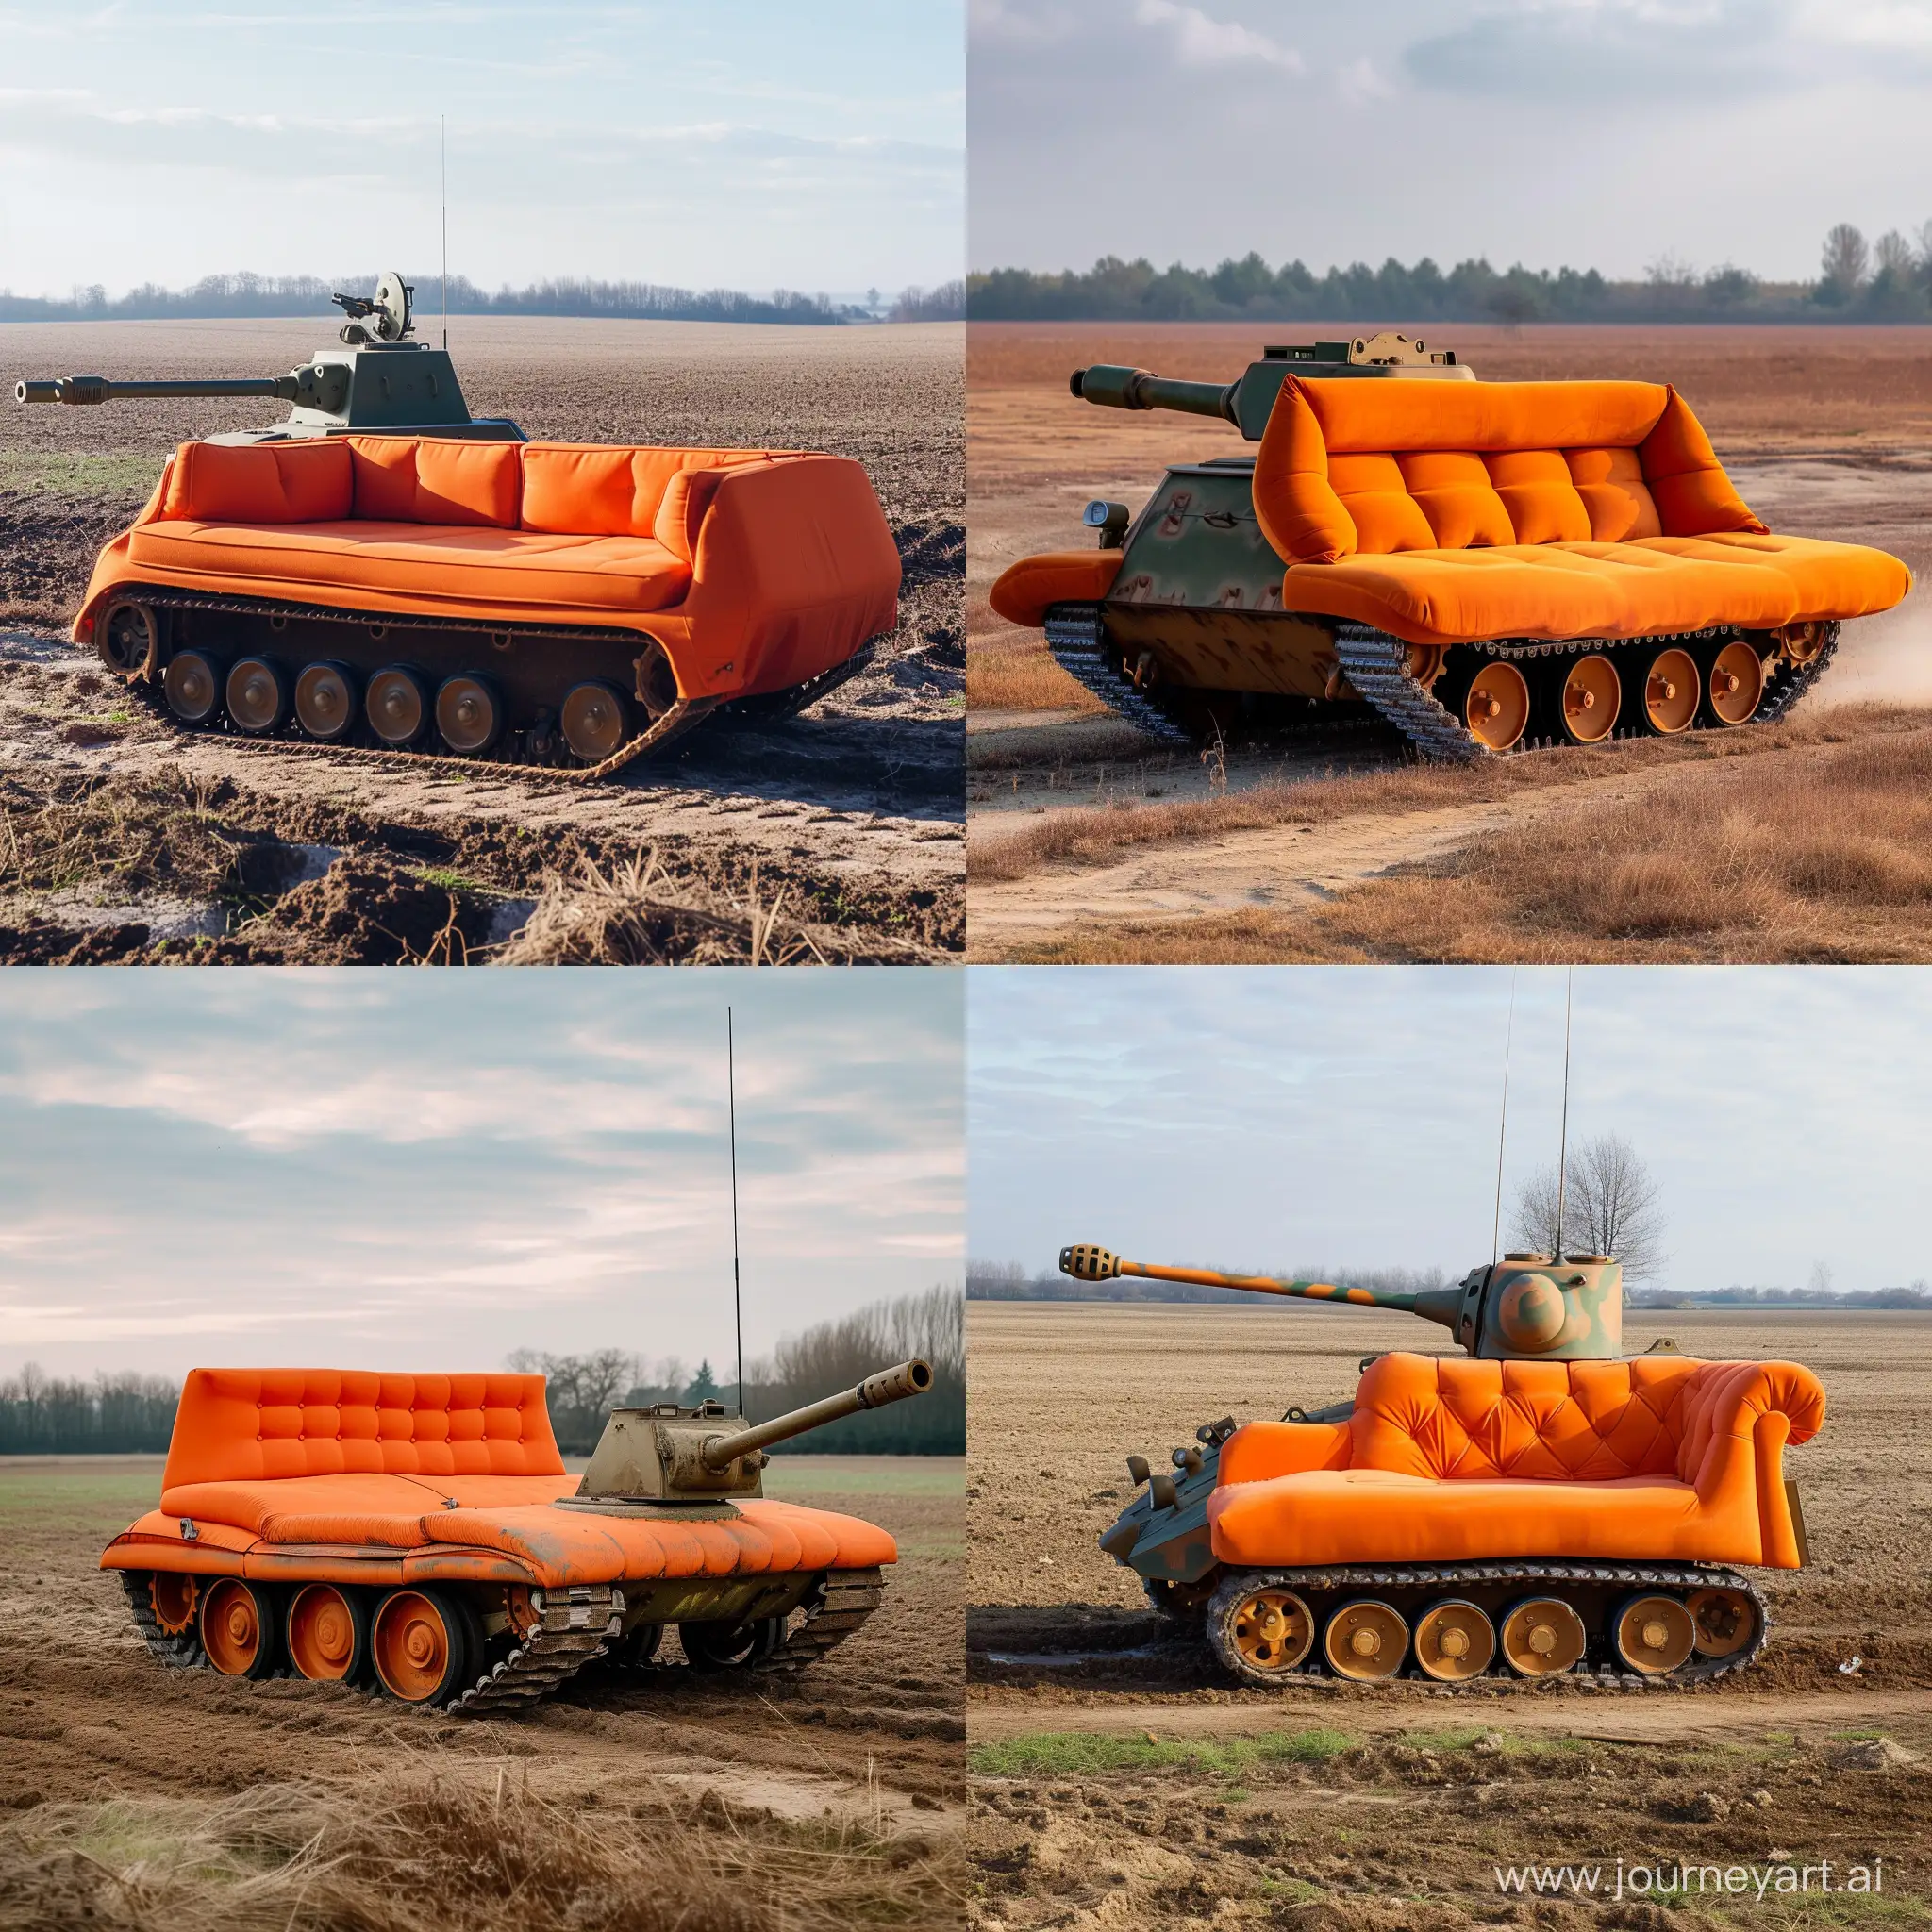 Tank-Turret-Sofa-Cruising-Across-Vibrant-Field